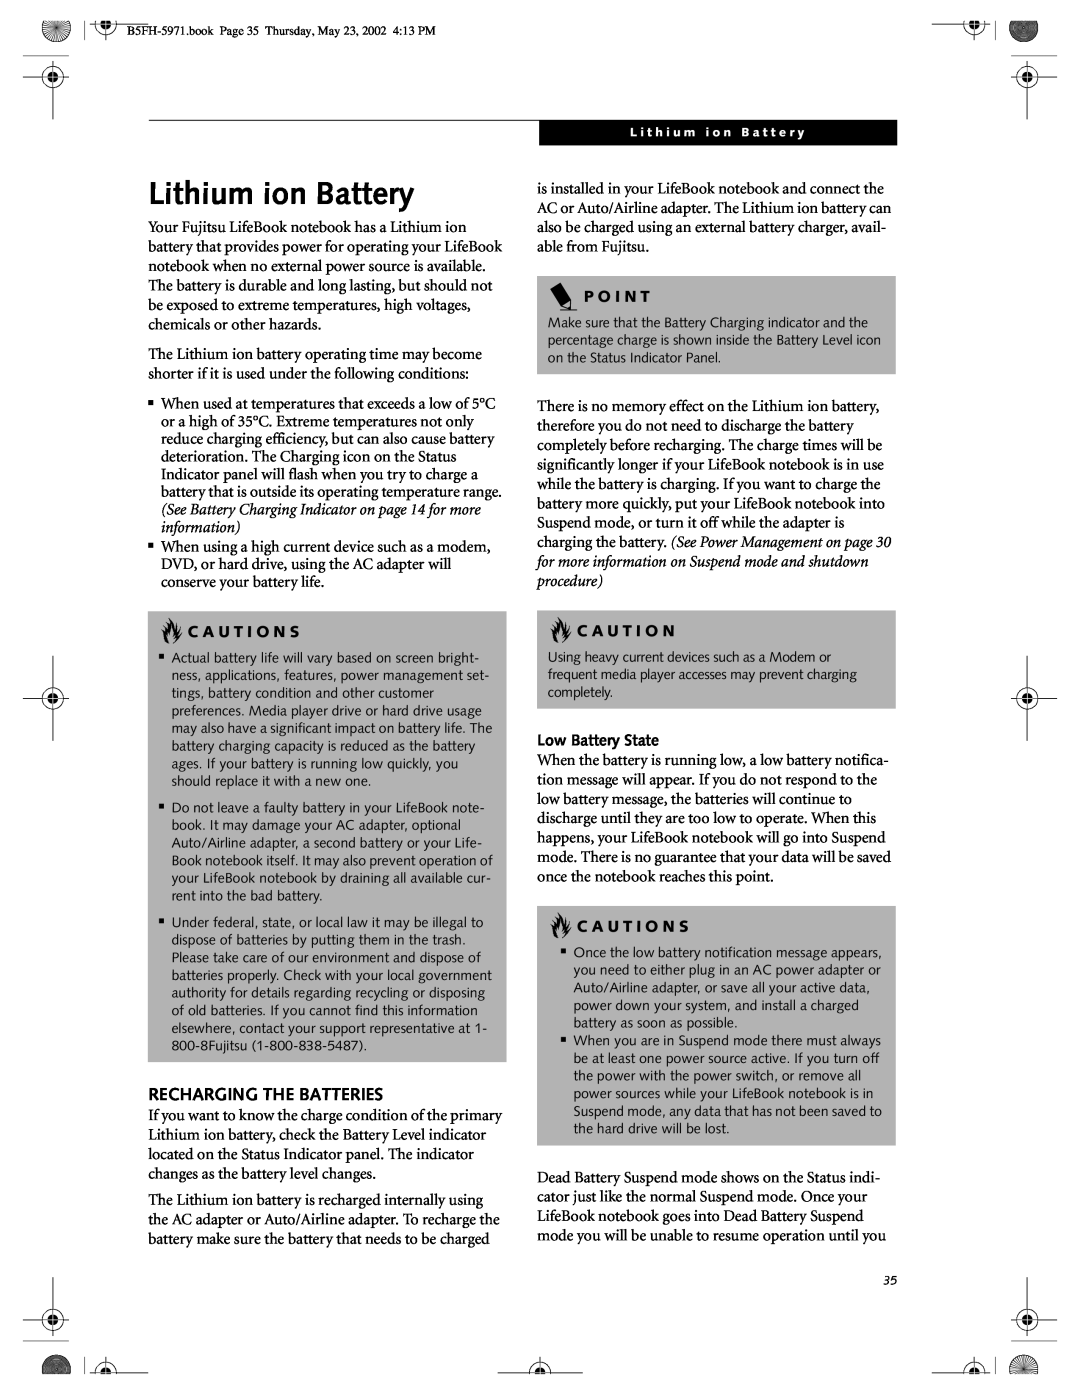 Fujitsu C2010, C2111 manual Lithium ion Battery, Recharging The Batteries, C A U T I O N S, P O I N T, Low Battery State 